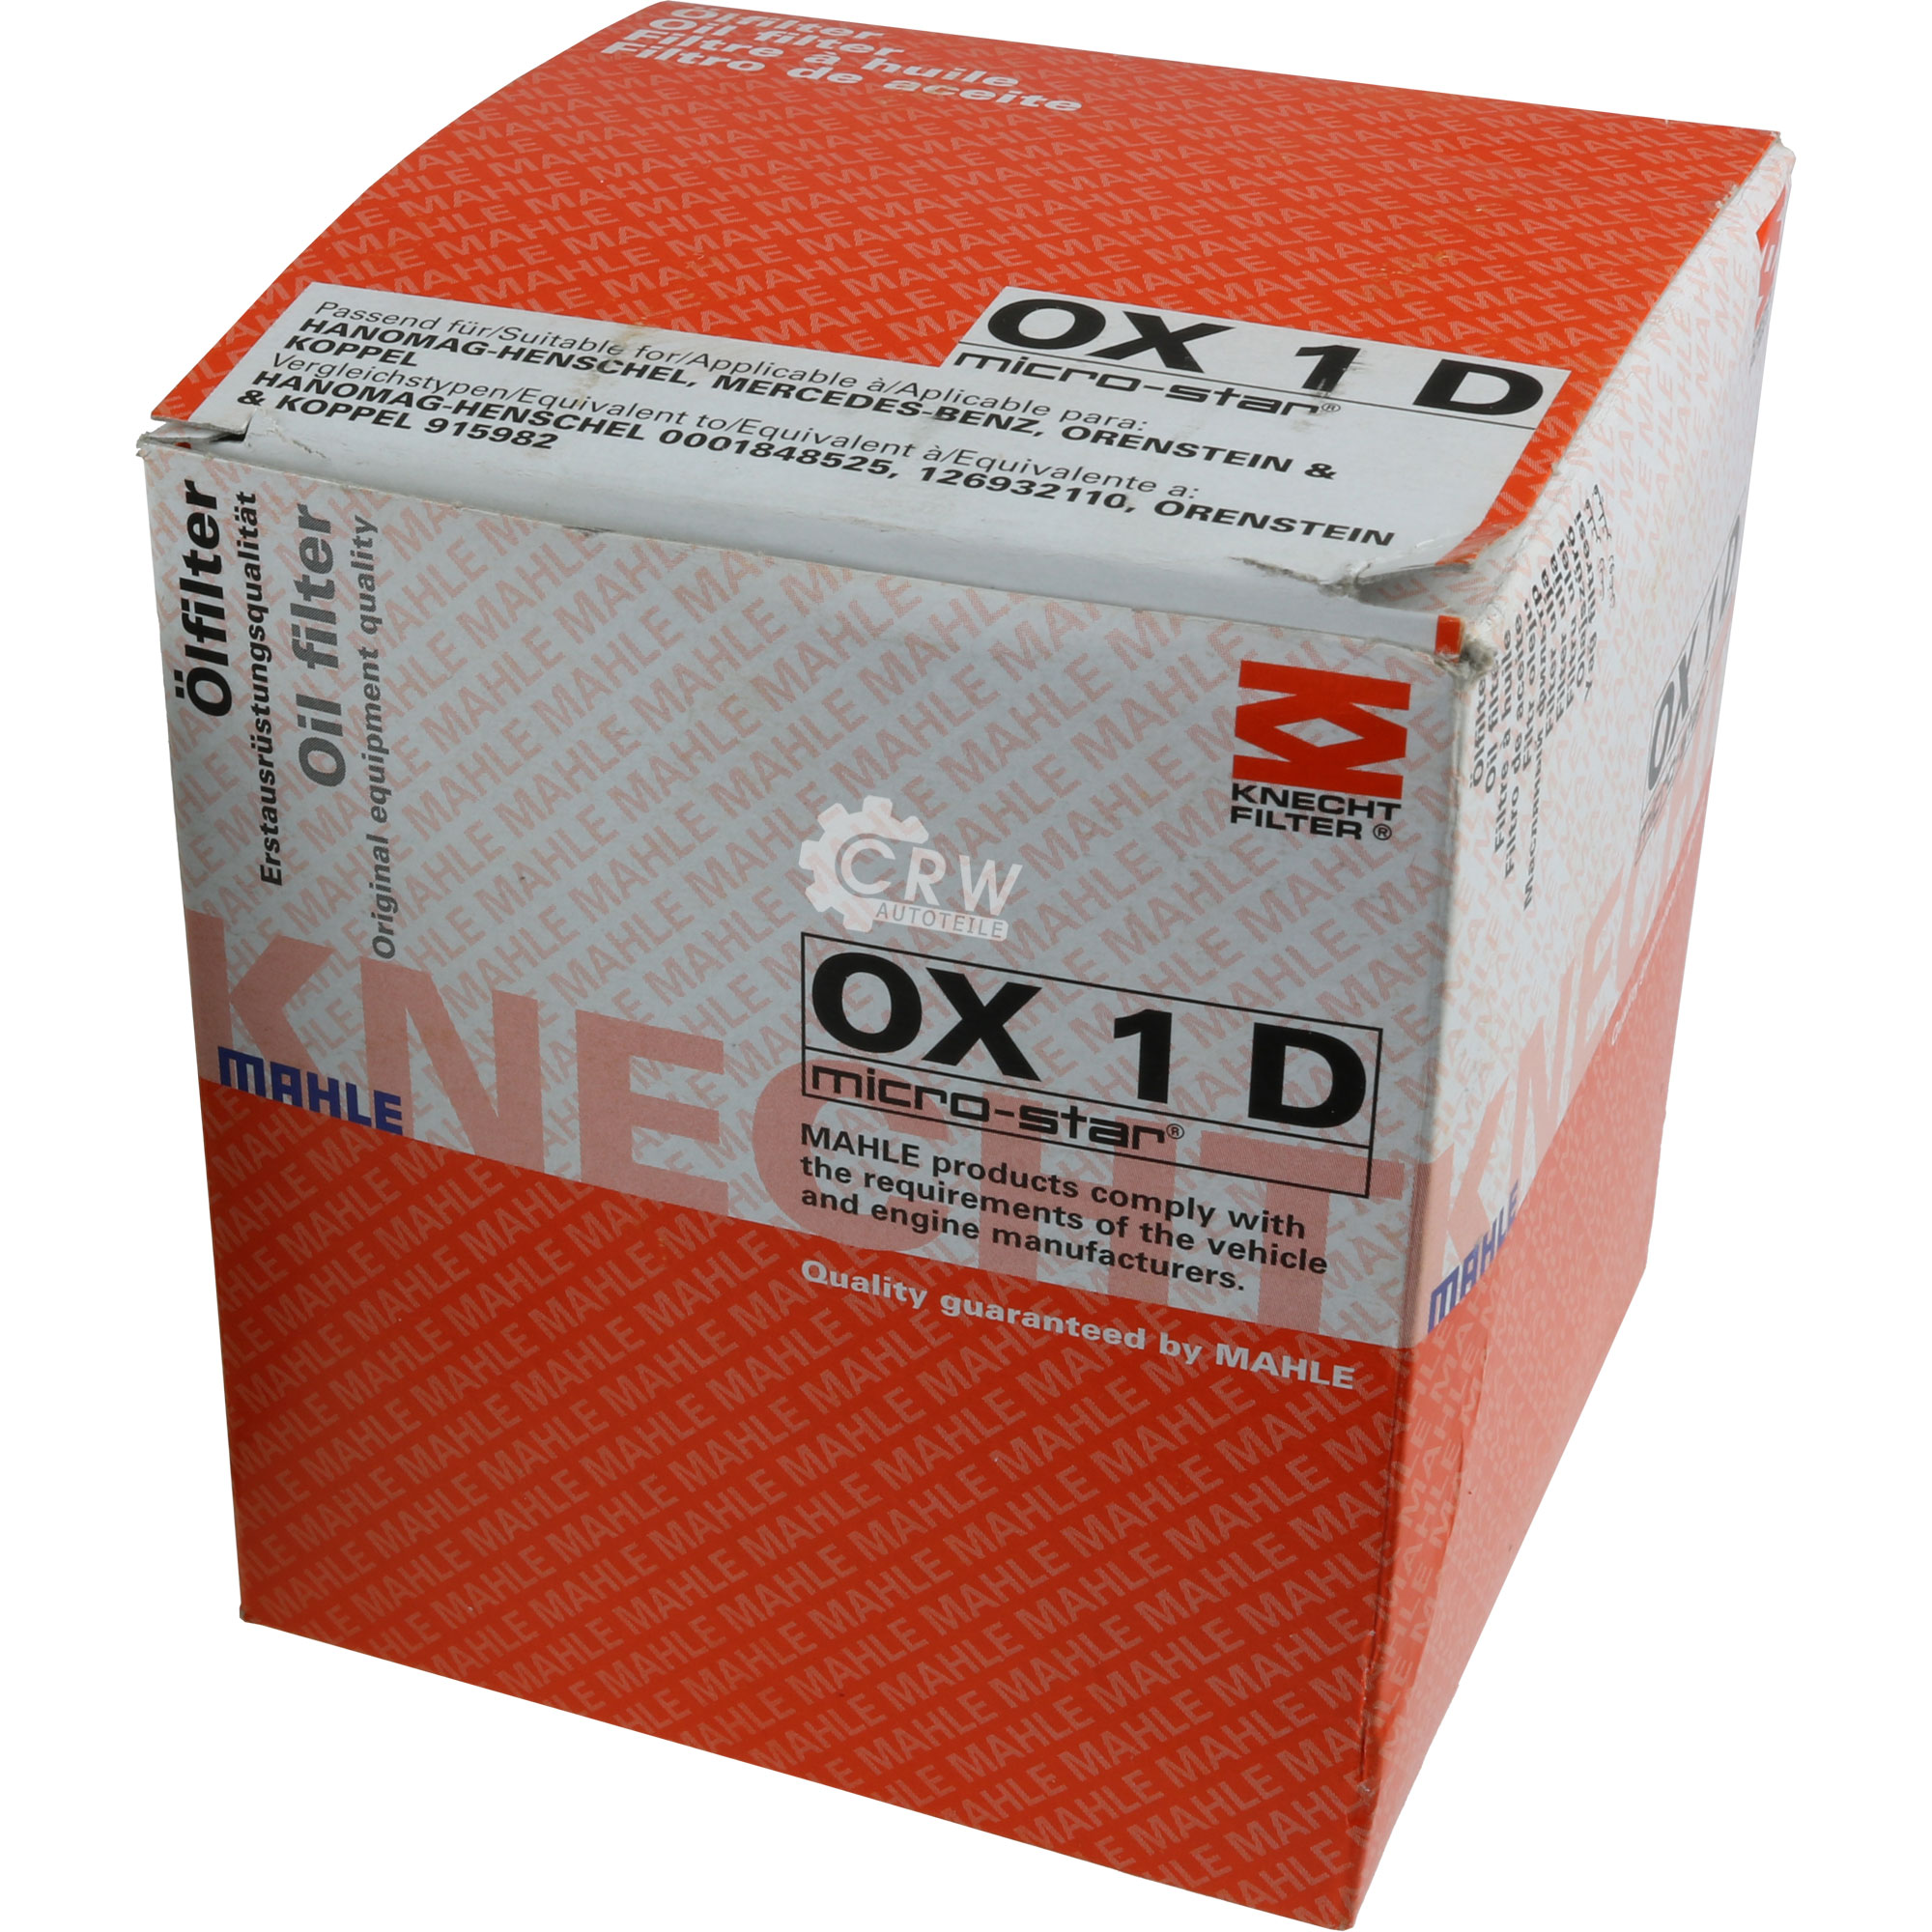 MAHLE Ölfilter OX 1D Oil Filter